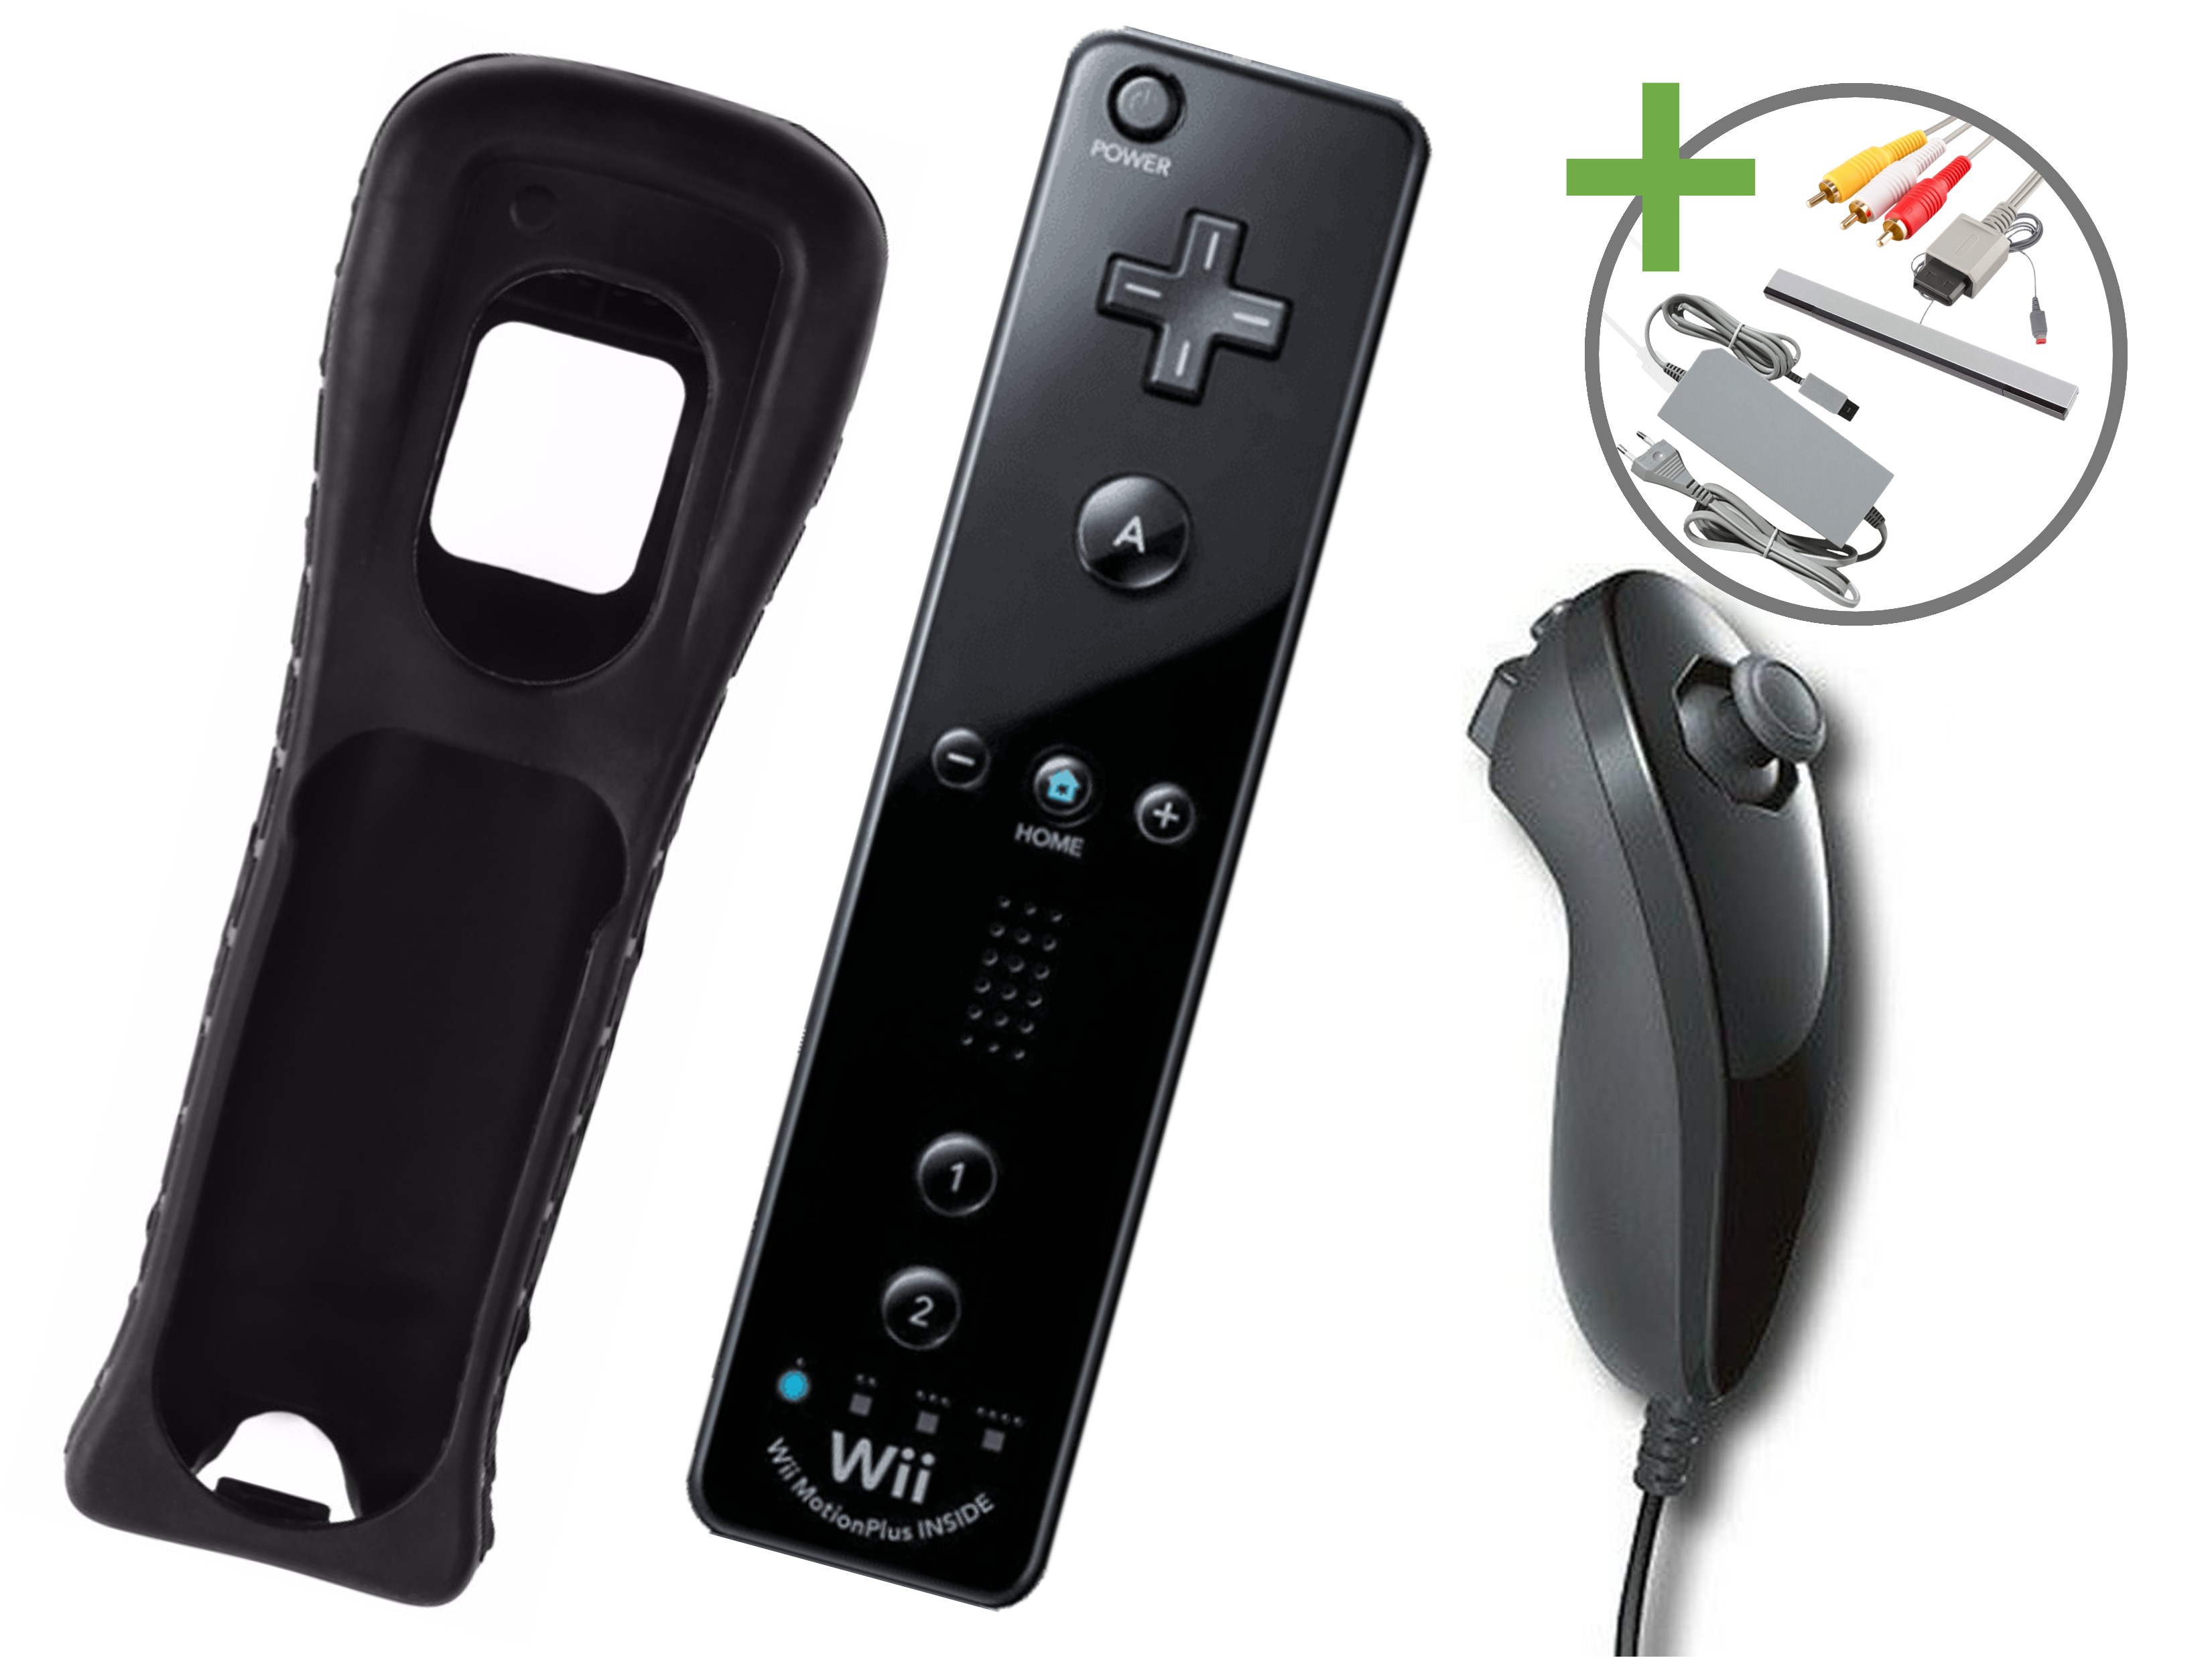 Nintendo Wii Mini Starter Pack - New Super Mario Bros. Wii Edition - Wii Hardware - 3